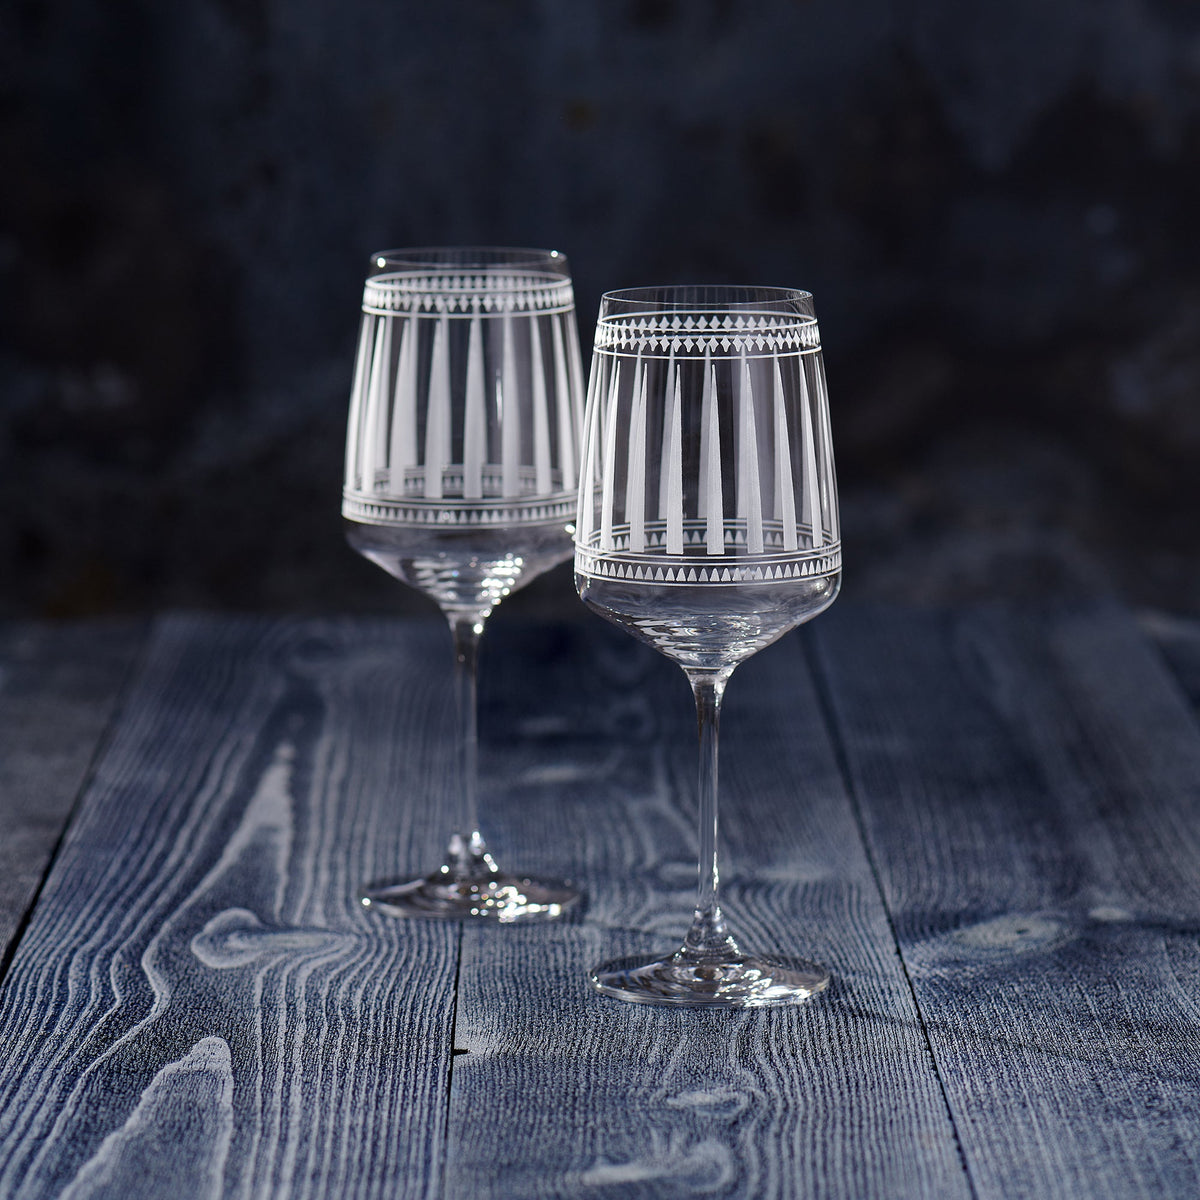 Two elegant Marrakech White Wine Glasses by Caskata Artisanal Home on a wooden table.